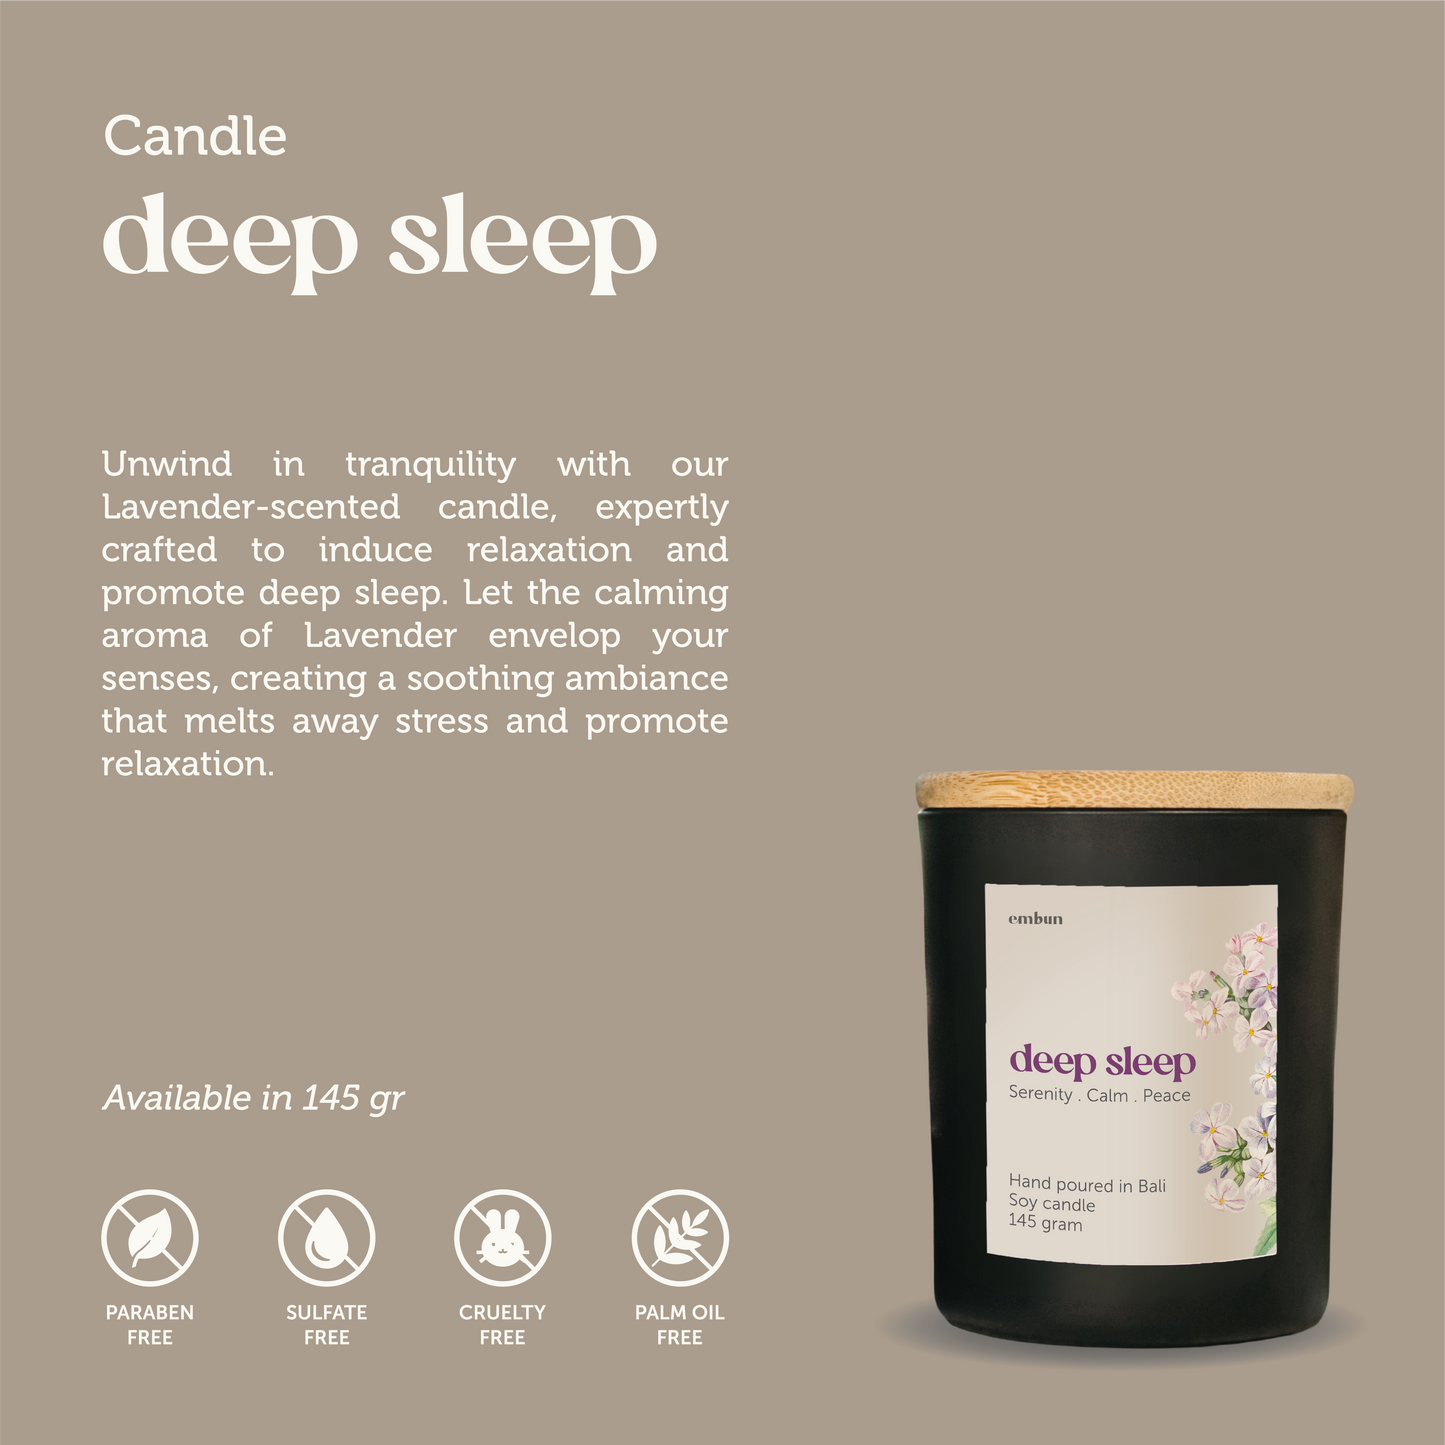 Candle Deep Sleep 145 gr